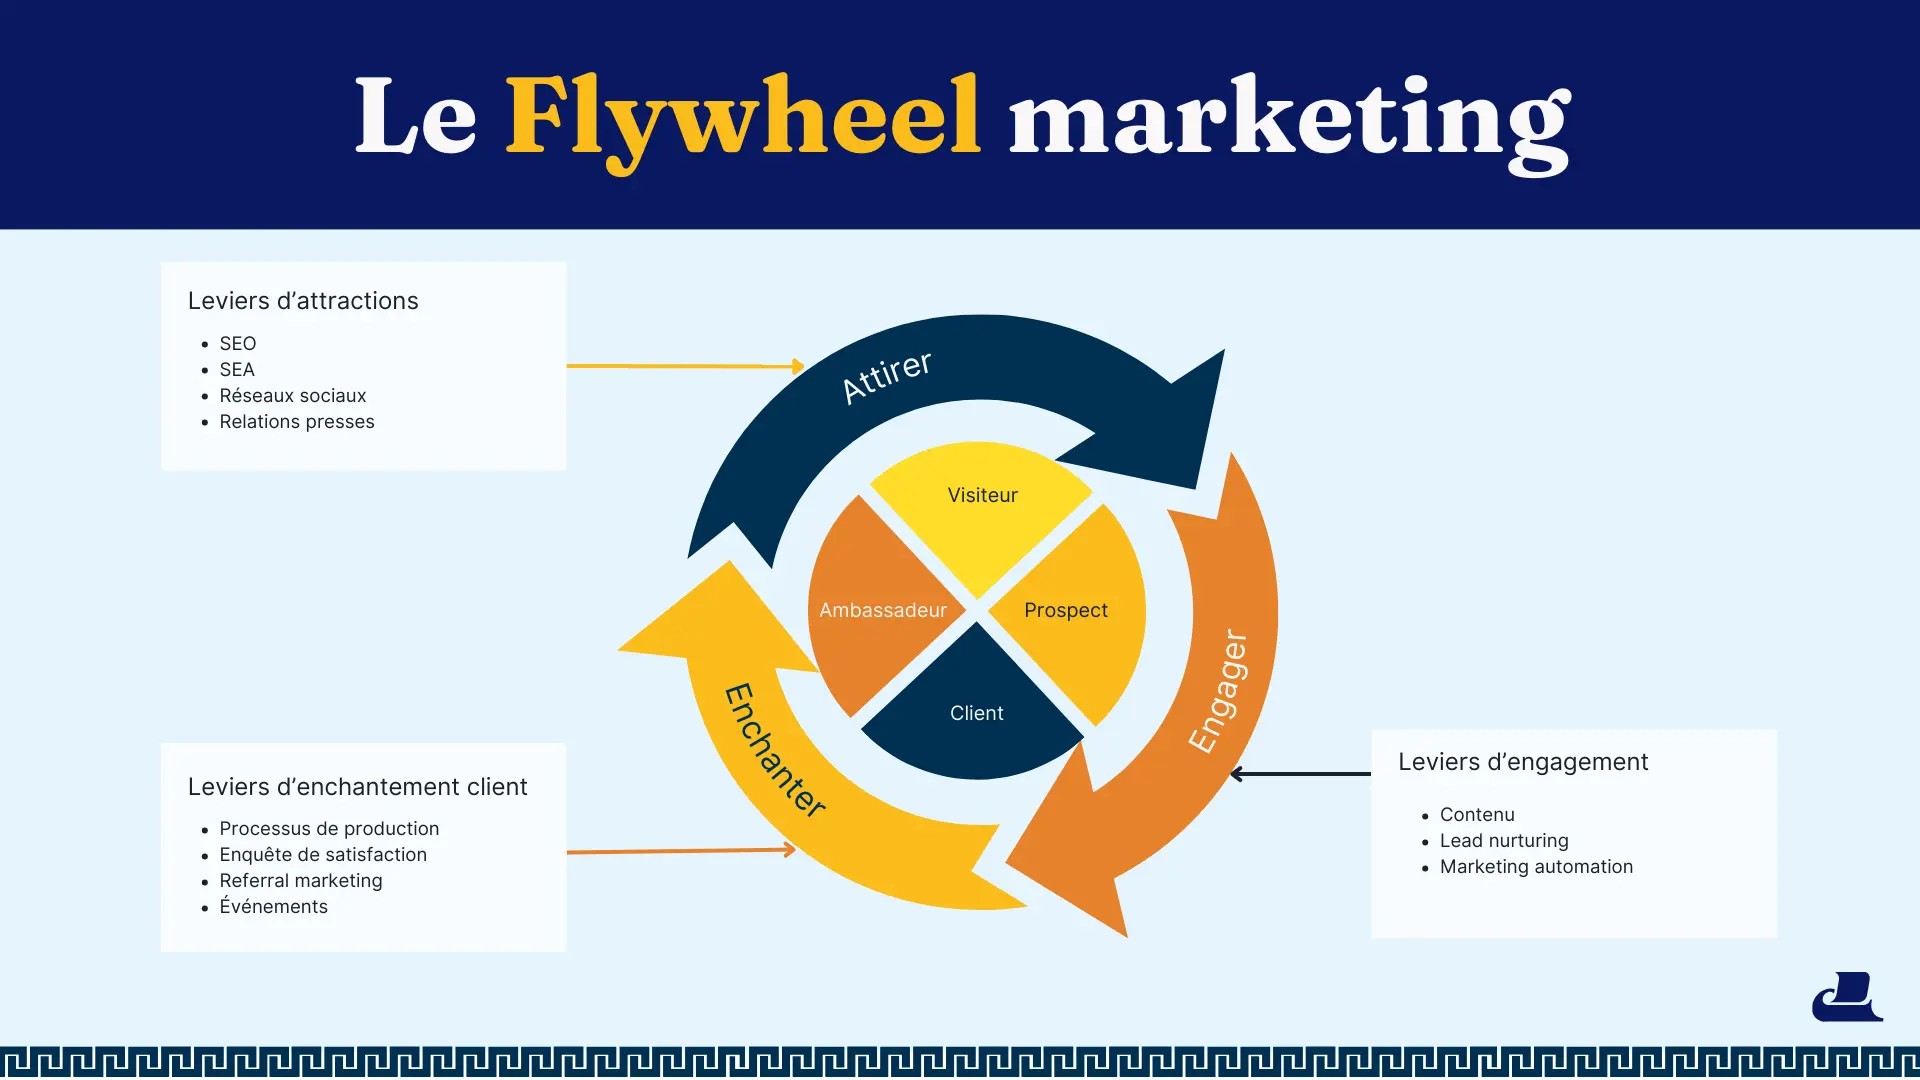 Le flywheel marketing c'est quoi ?